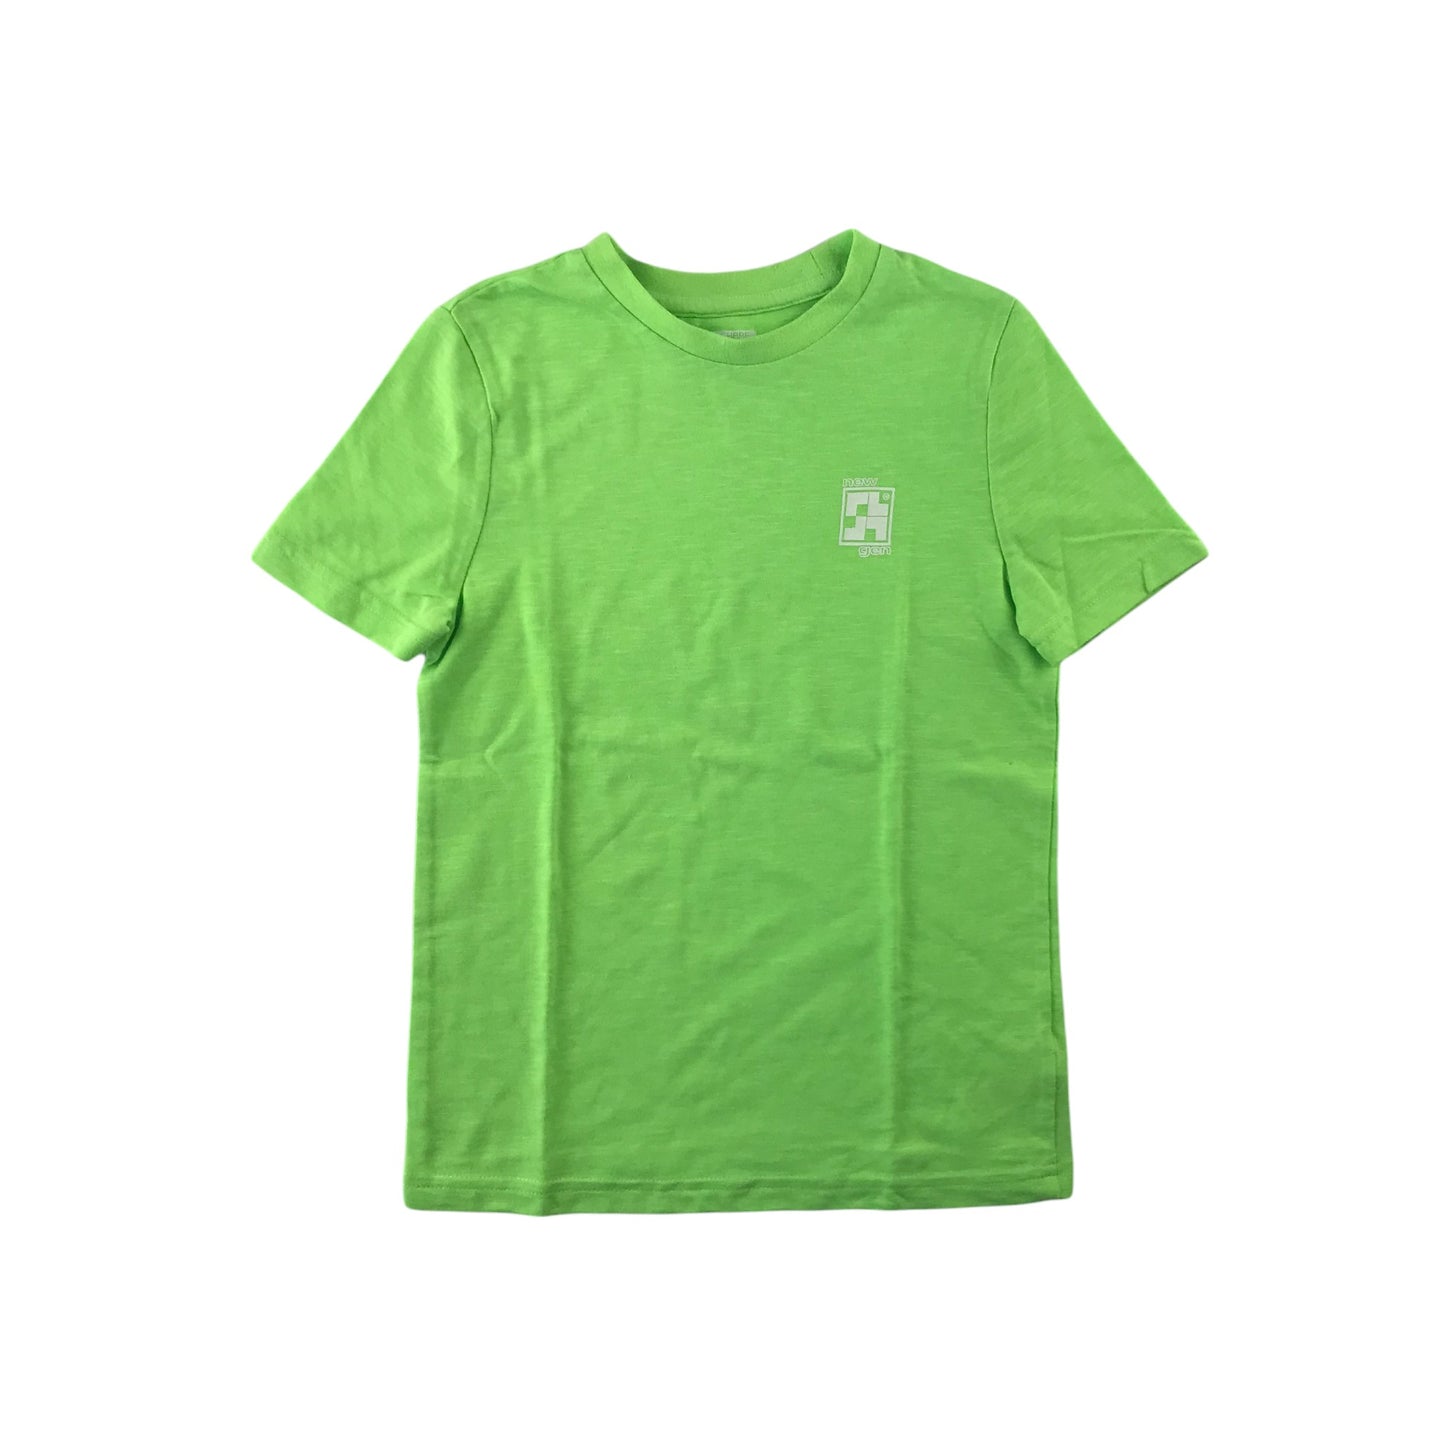 F&F T-shirt 7-8 years green plain gaming new gen